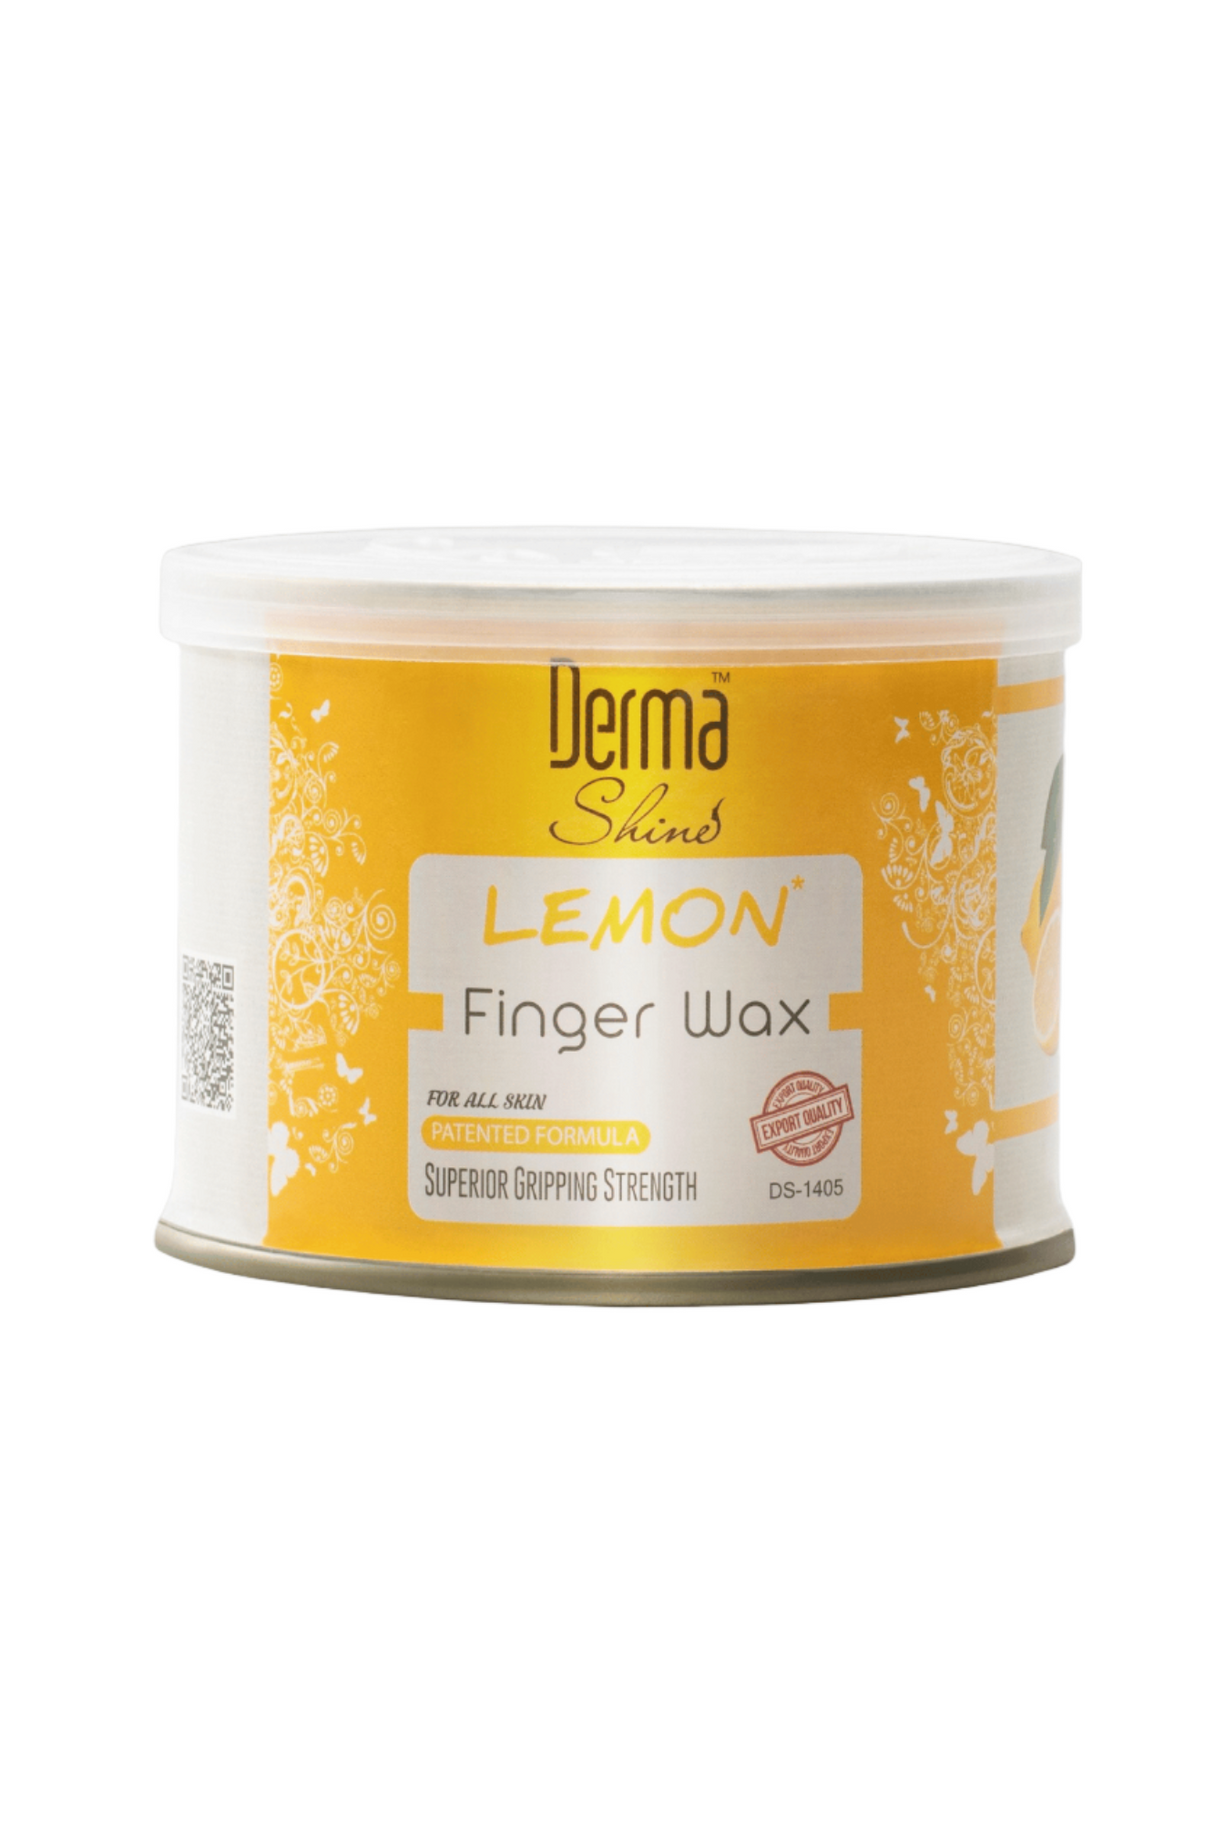 derma shine finger wax lemon 250g